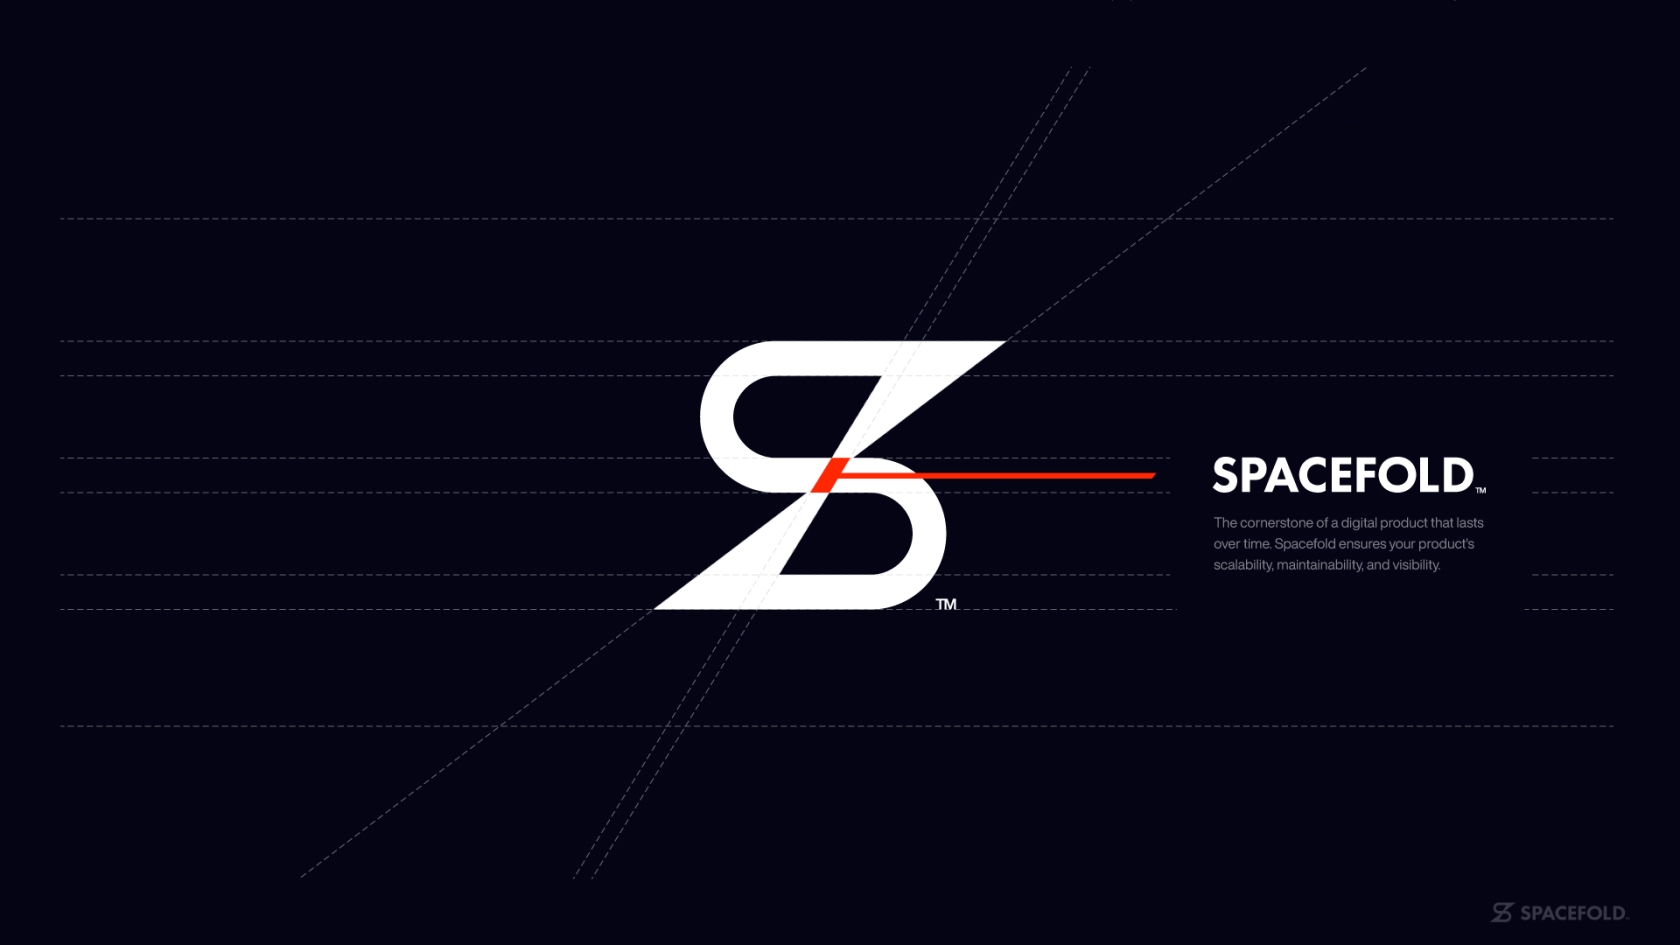 Conception du logo Spacefold